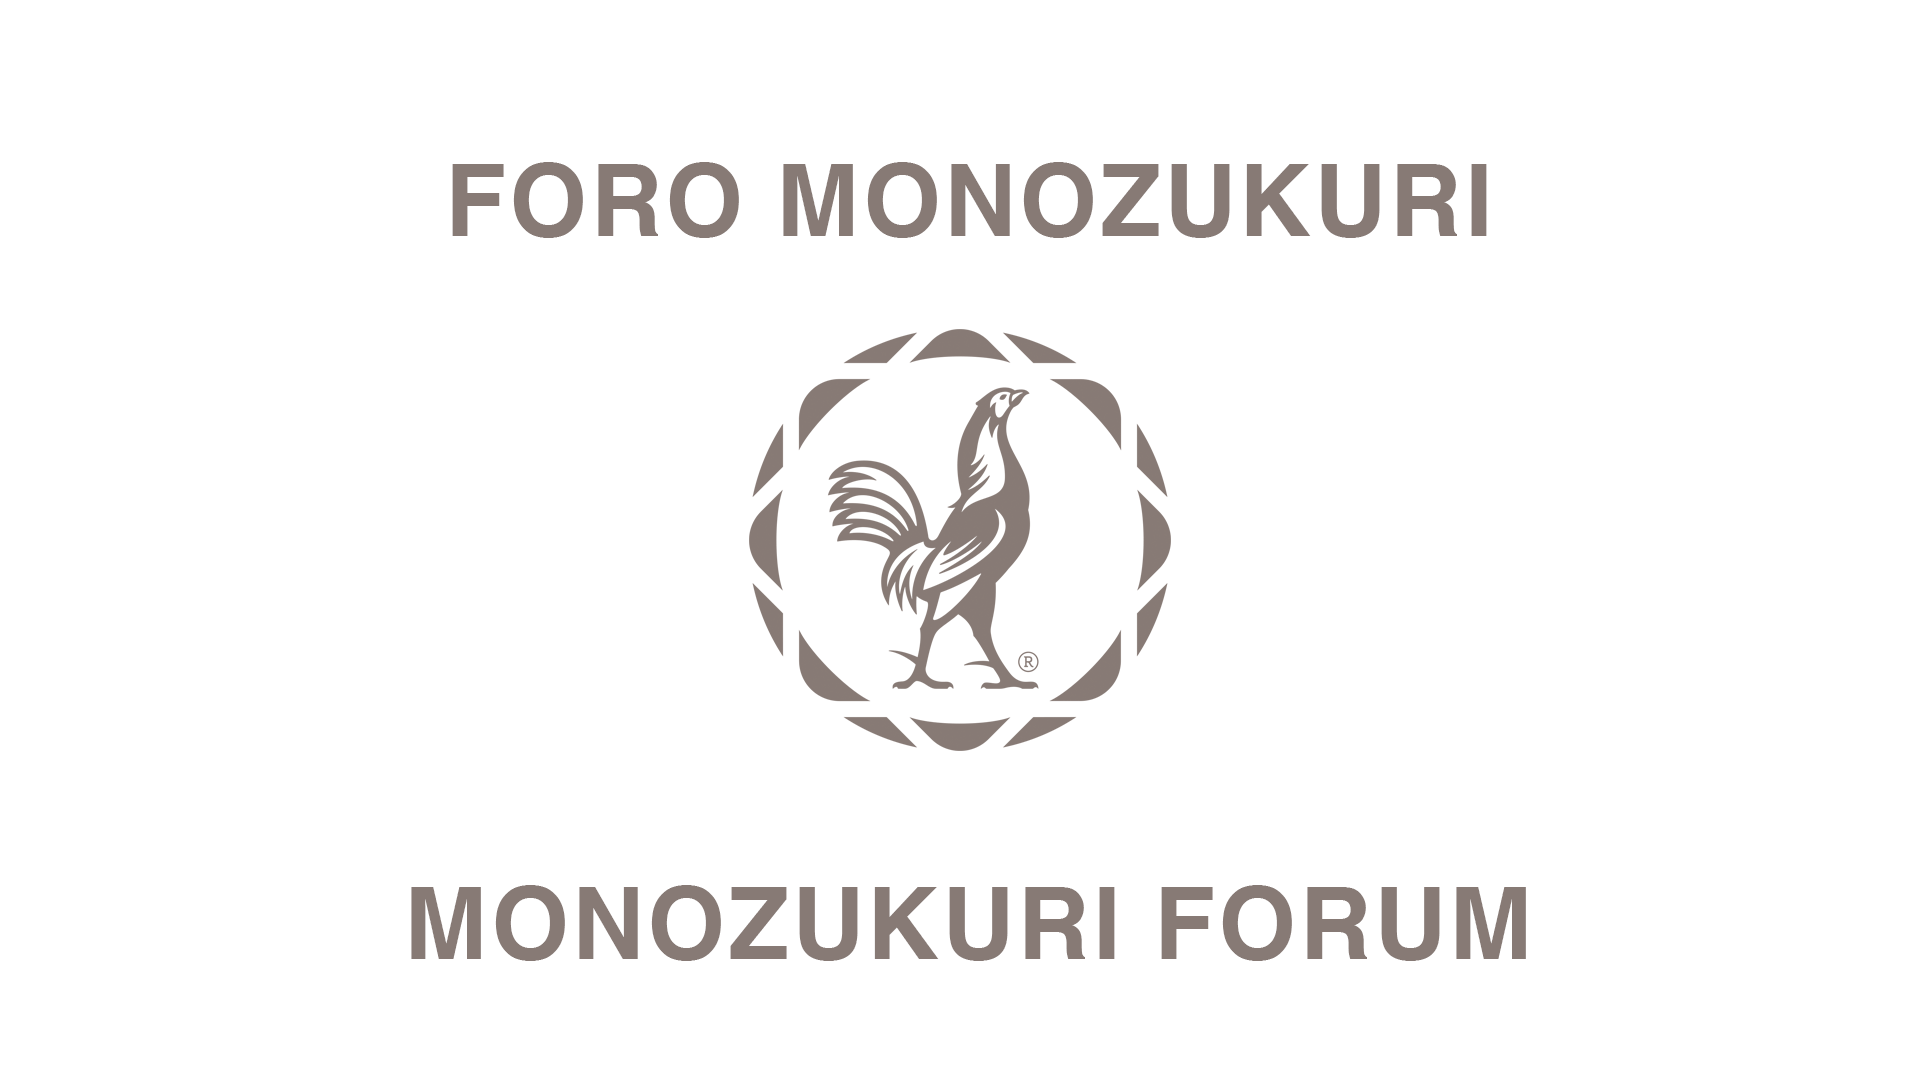 Sauza Logo - Results of the Monozukuri Work Philosophy. The Monozukuri forum at